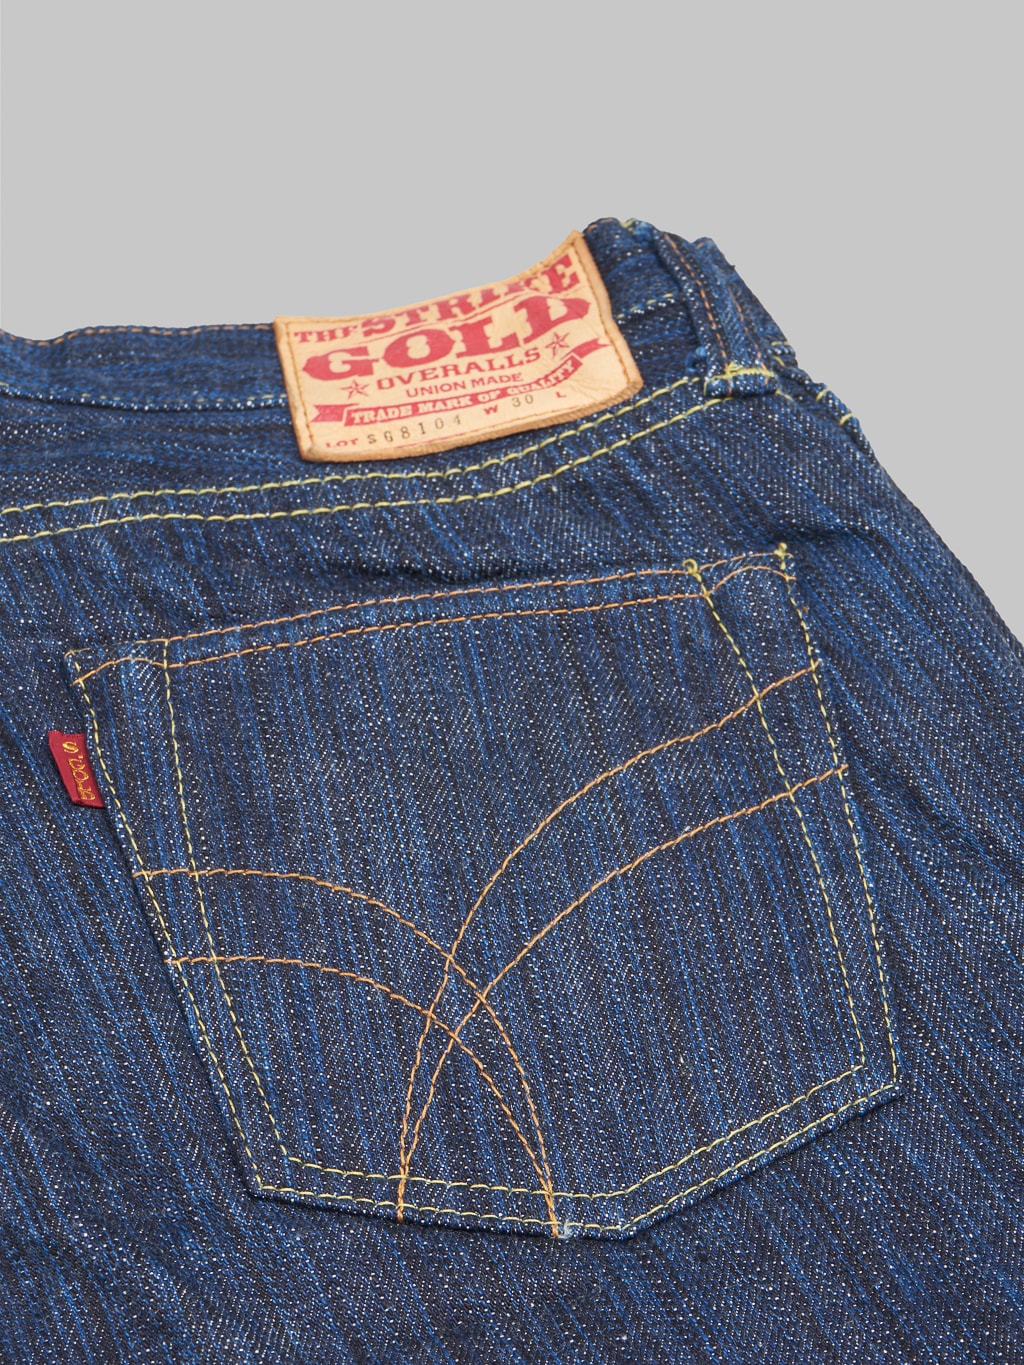 The Strike Gold 8104 Shower Slub jeans pocket arcs